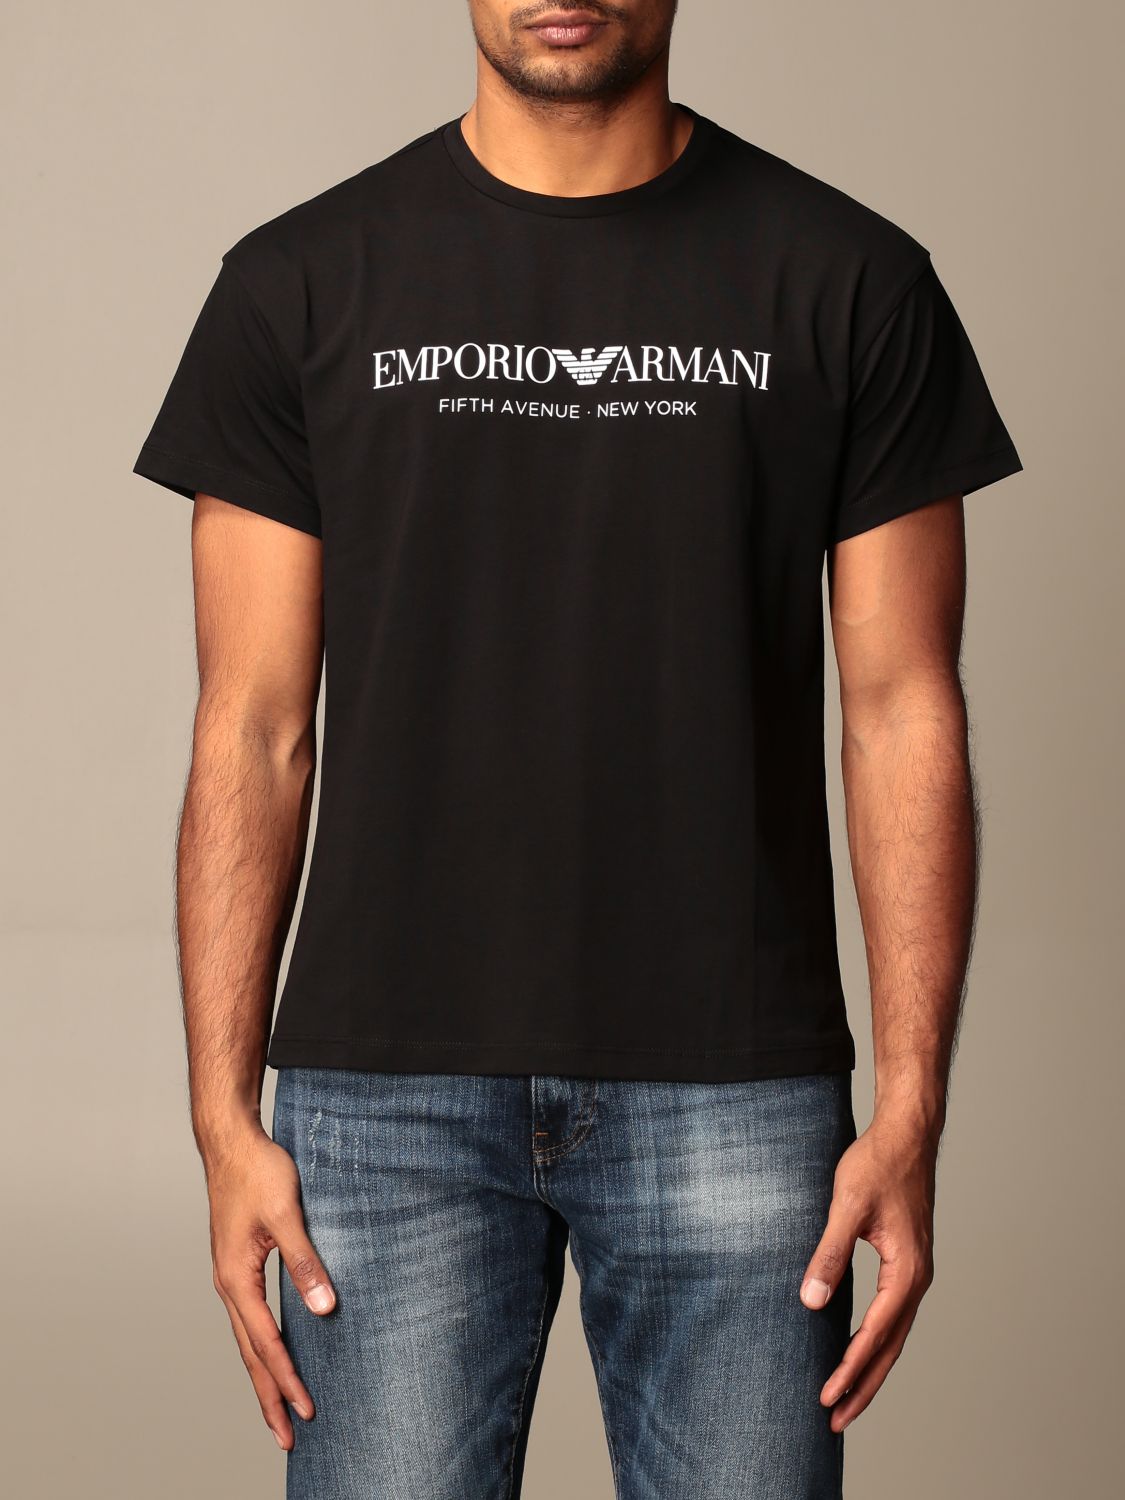 Emporio Armani Outlet: t-shirt for men - Black | Emporio Armani t-shirt  3Z2T7Q 2JO4Z online on 